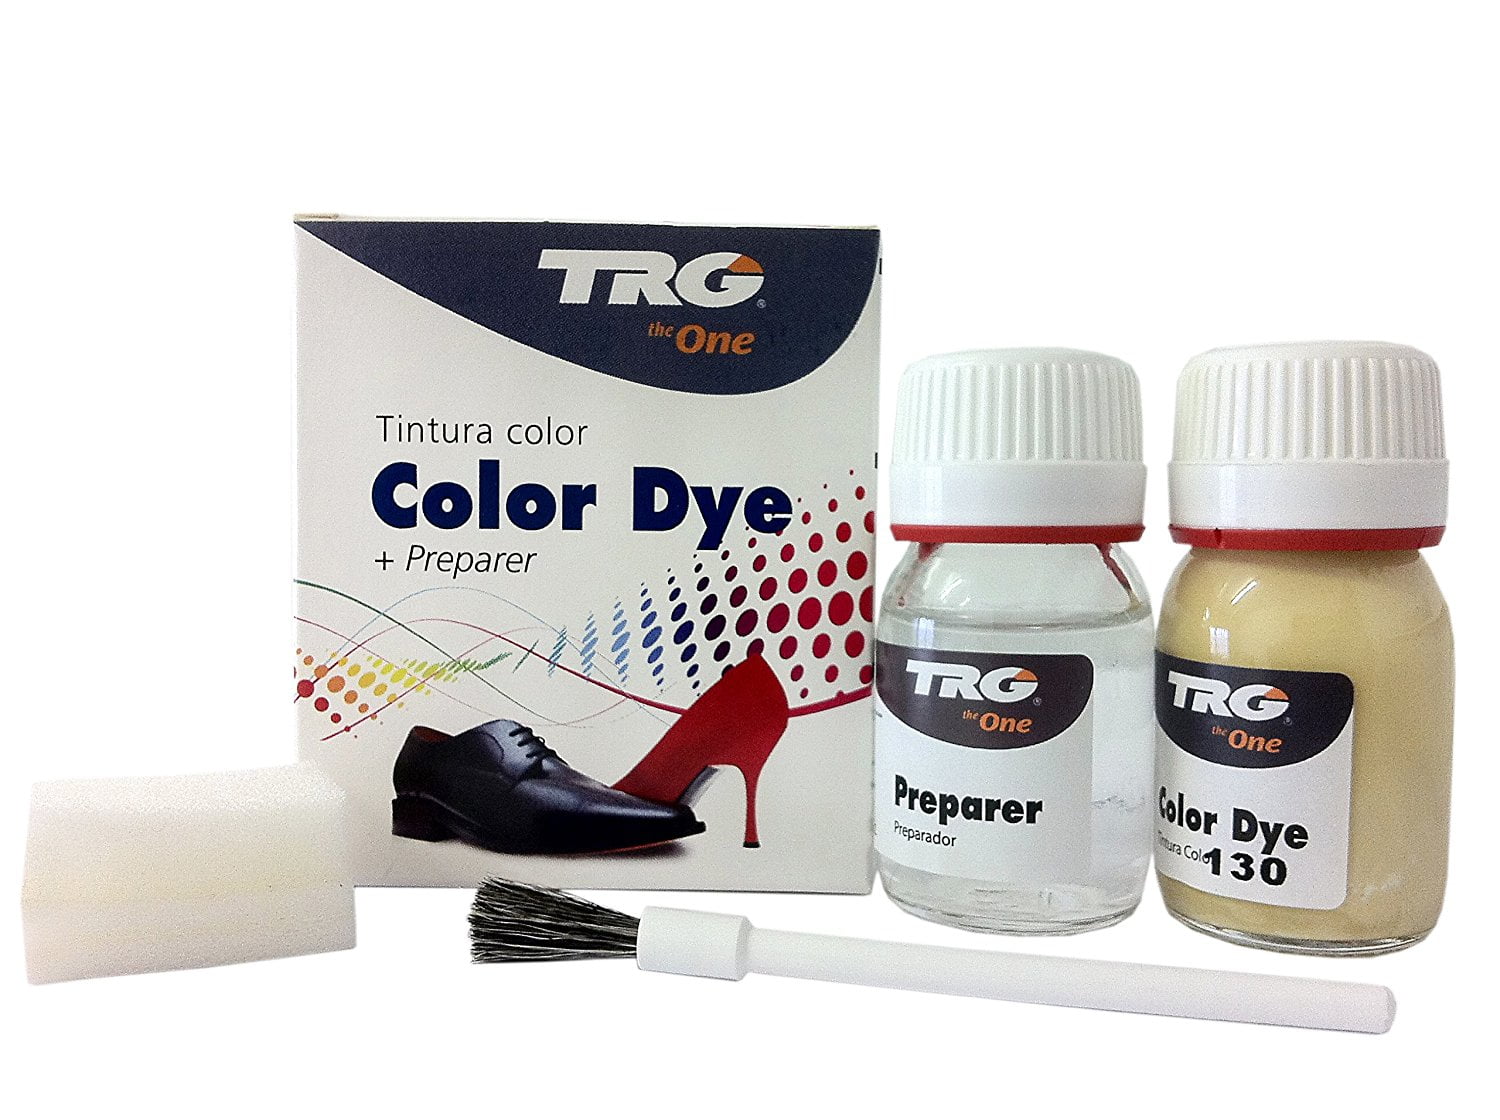 TRG the One Self Shine Leather Dye Kit #118 Black